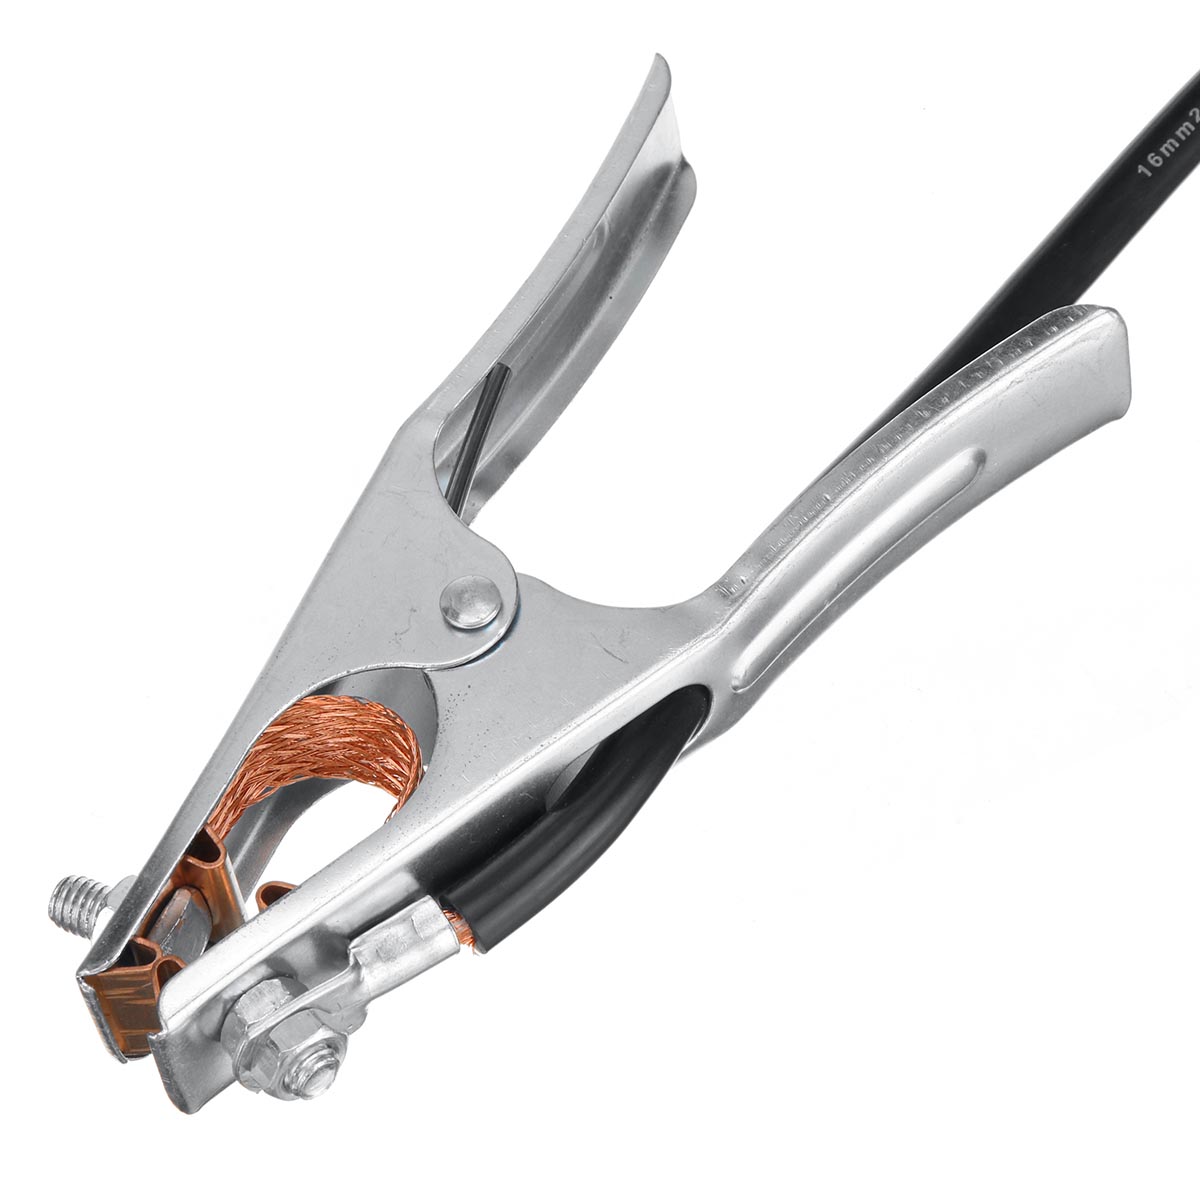 5500W-ARC-Welding-Machine-Handheld-Electric-Welding-Tools-with-Ground-Wire-Metal-Clip-220V-EU-Plug-1901484-11